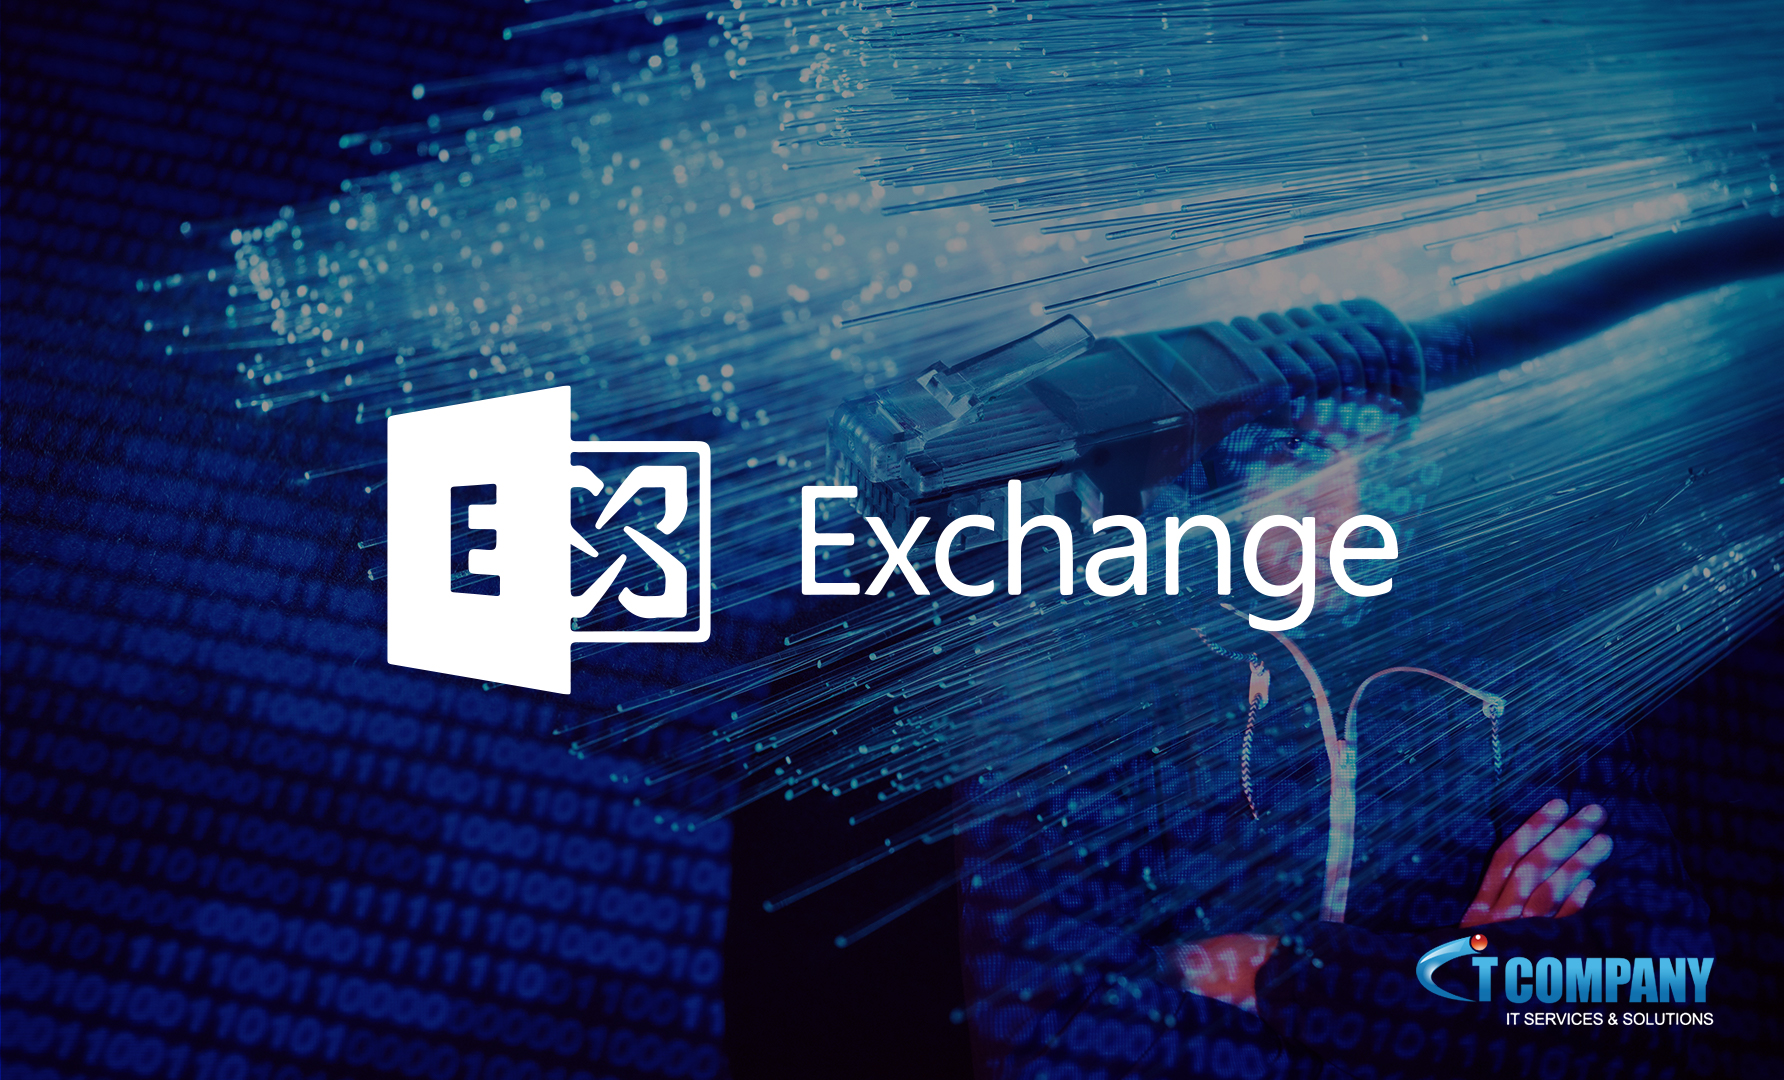 Ransomware exploited Microsoft Exchange servers